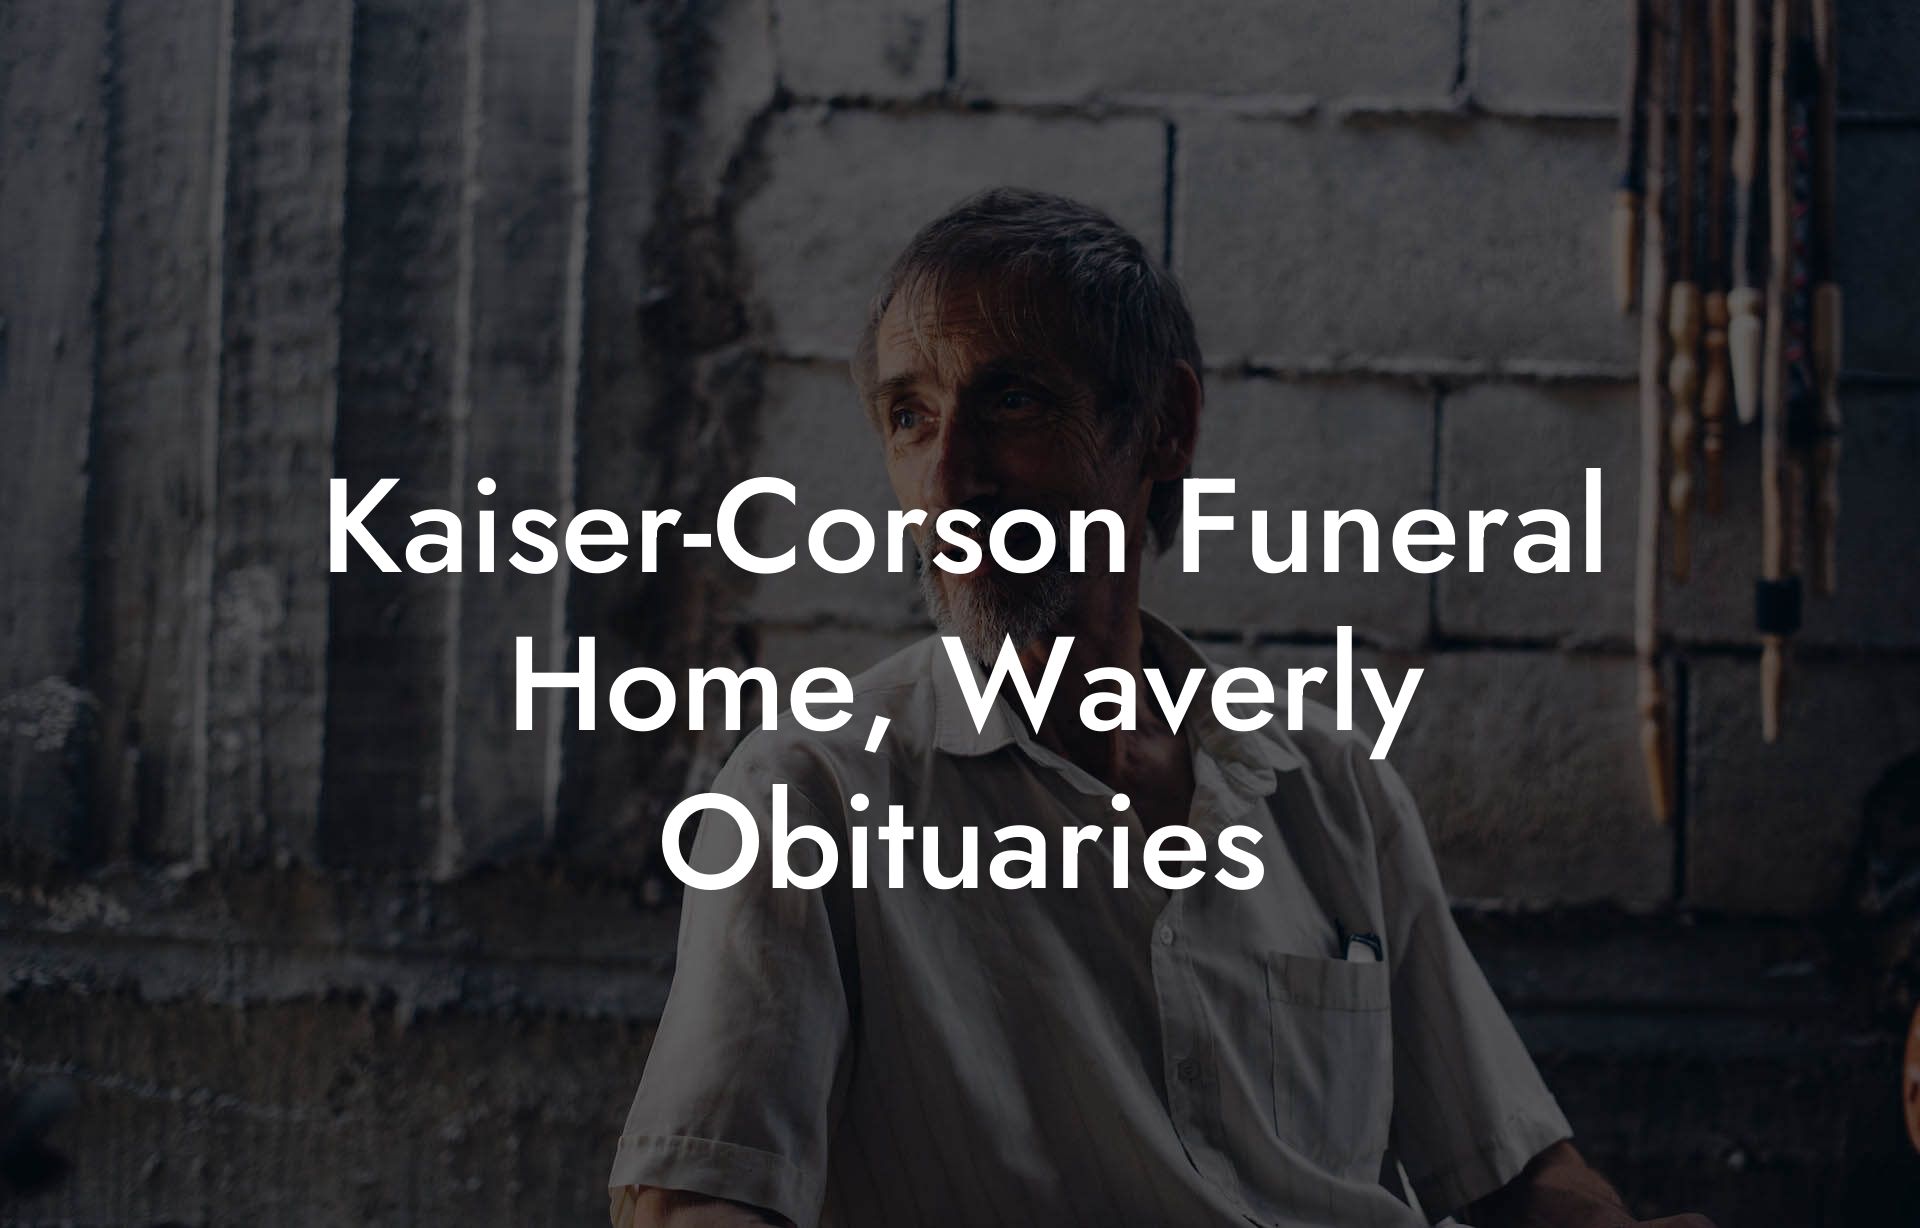 Kaiser-Corson Funeral Home, Waverly Obituaries